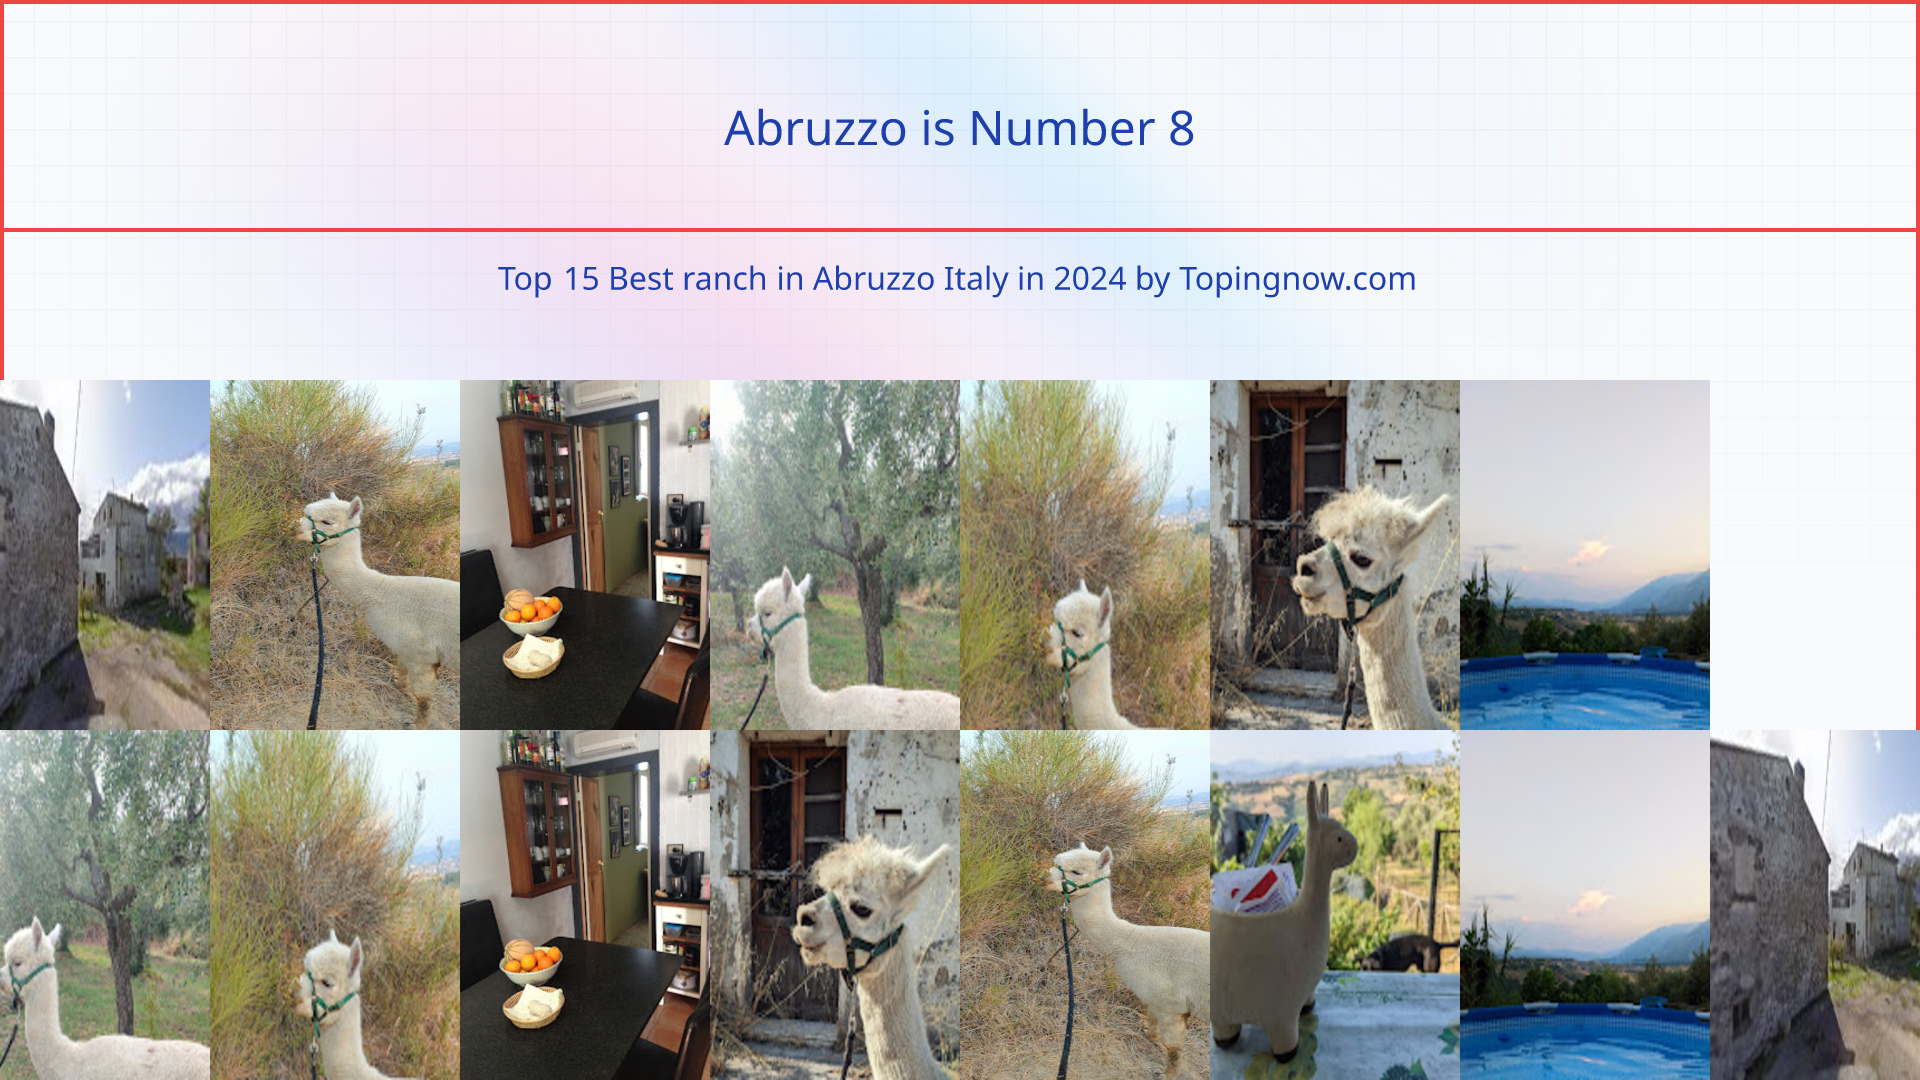 Abruzzo: Top 15 Best ranch in Abruzzo Italy in 2024